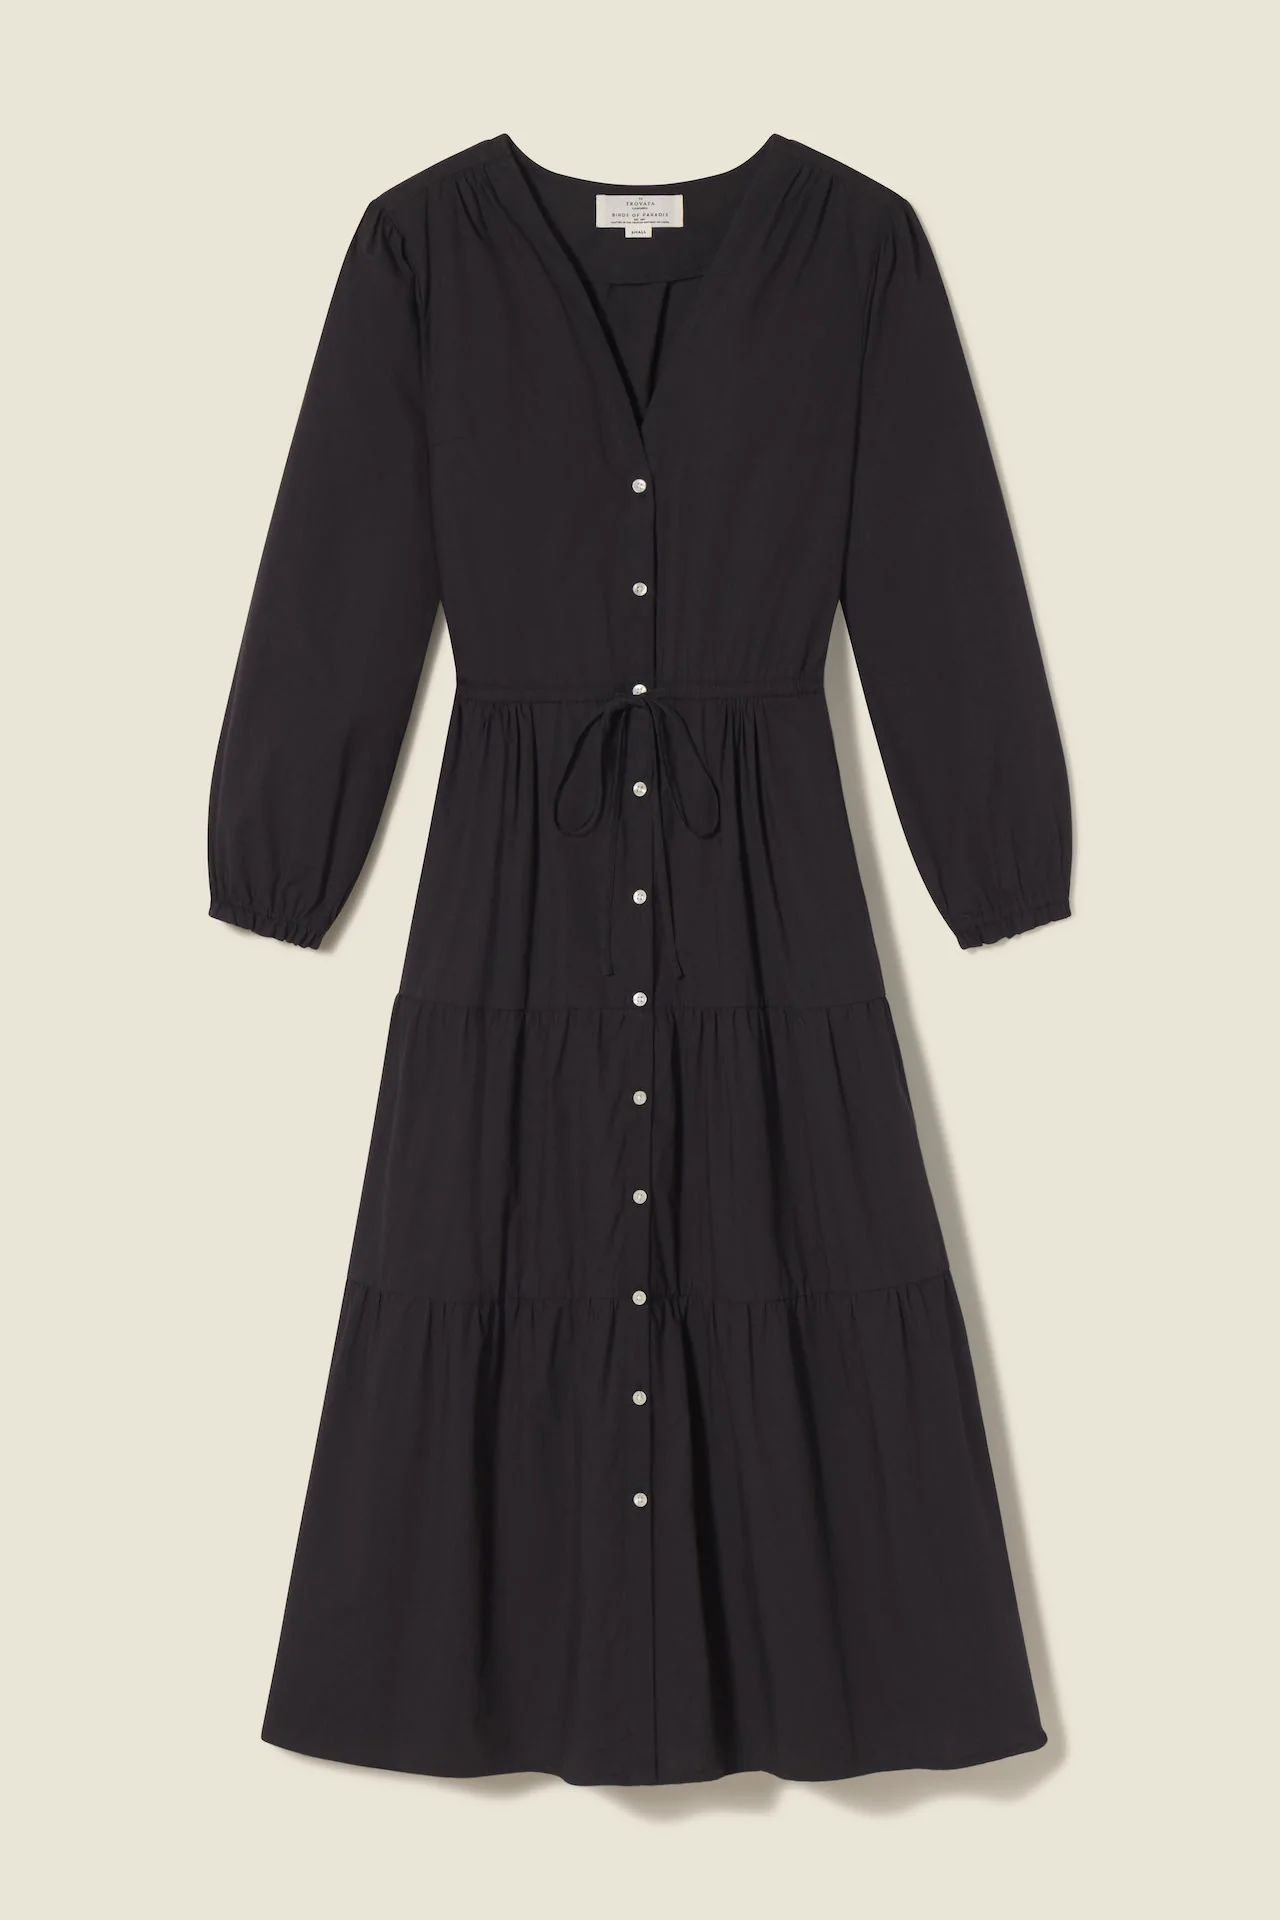 Ainsley "B" Dress Black | TROVATA